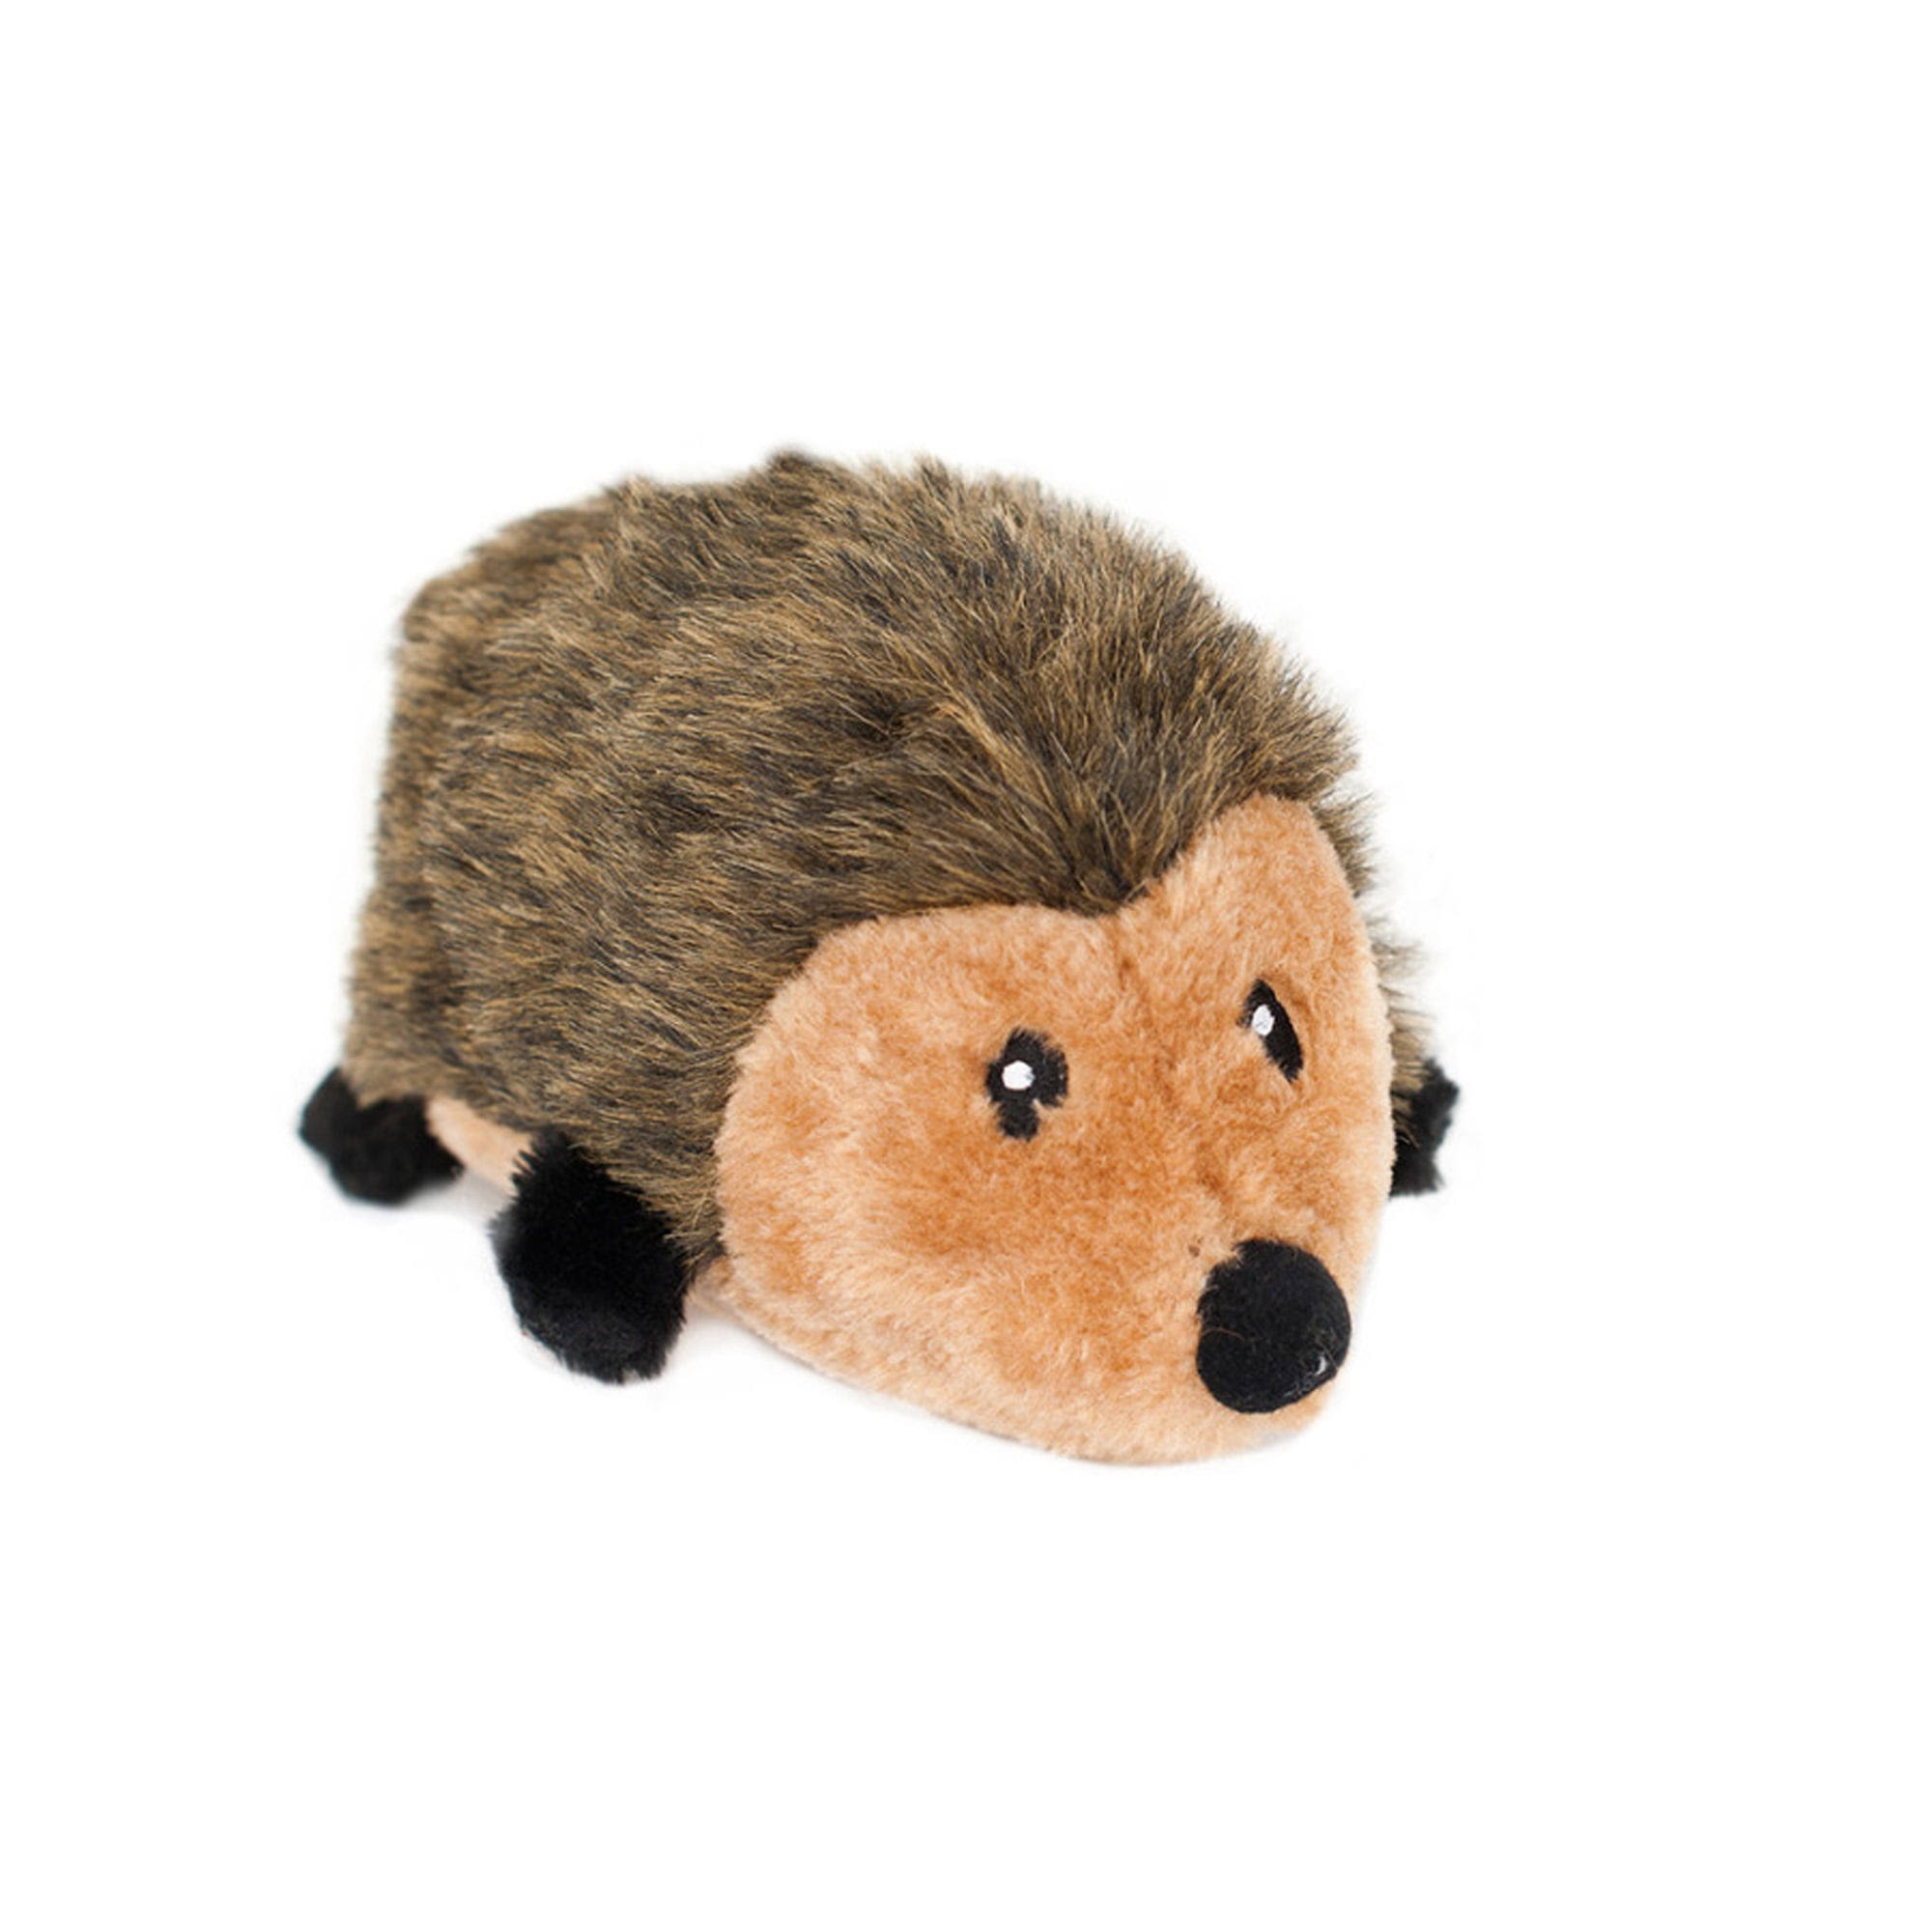 ZippyPaws Hedgehog Squeaky Plush Dog Toy - Large, 9 in